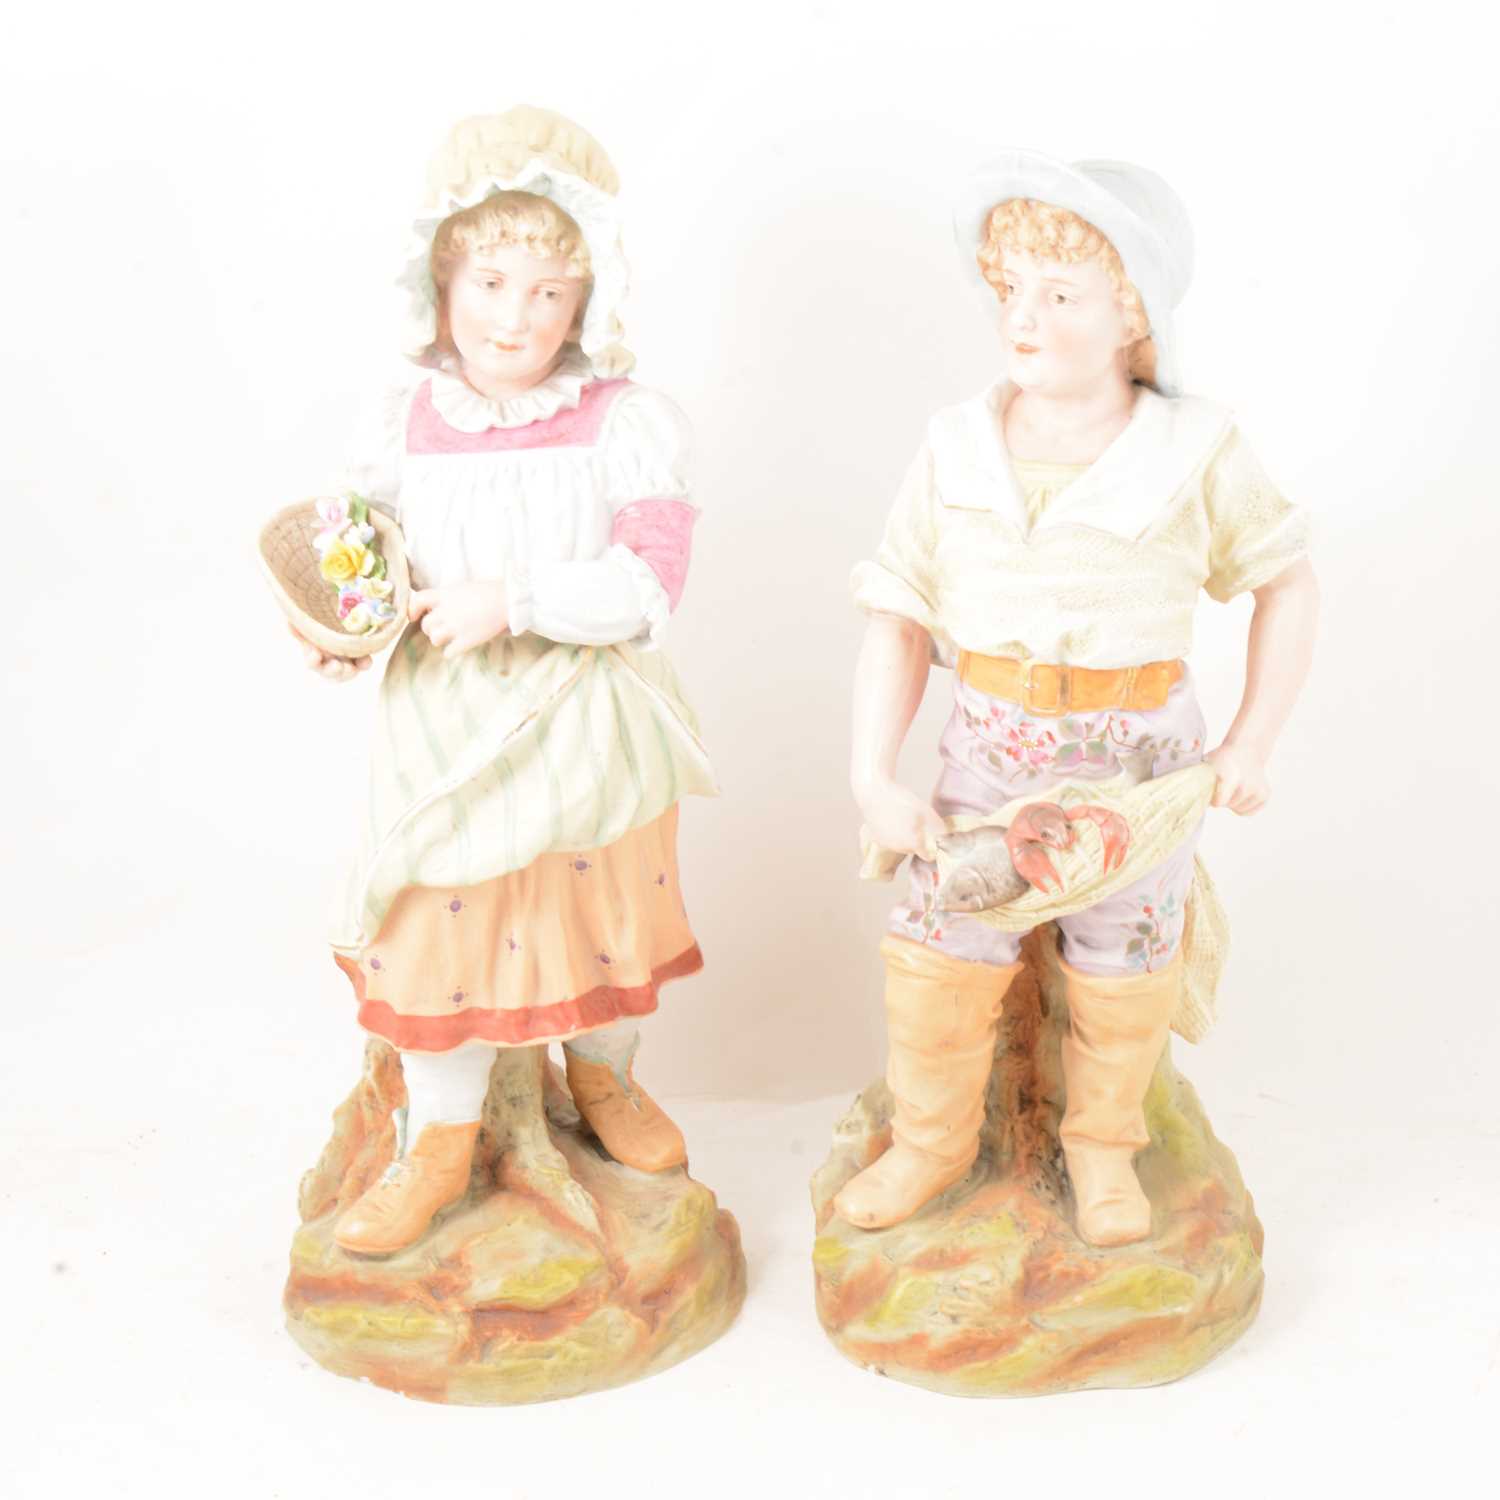 Lot 40 - Pair of large Heubach bisque porcelain figures.